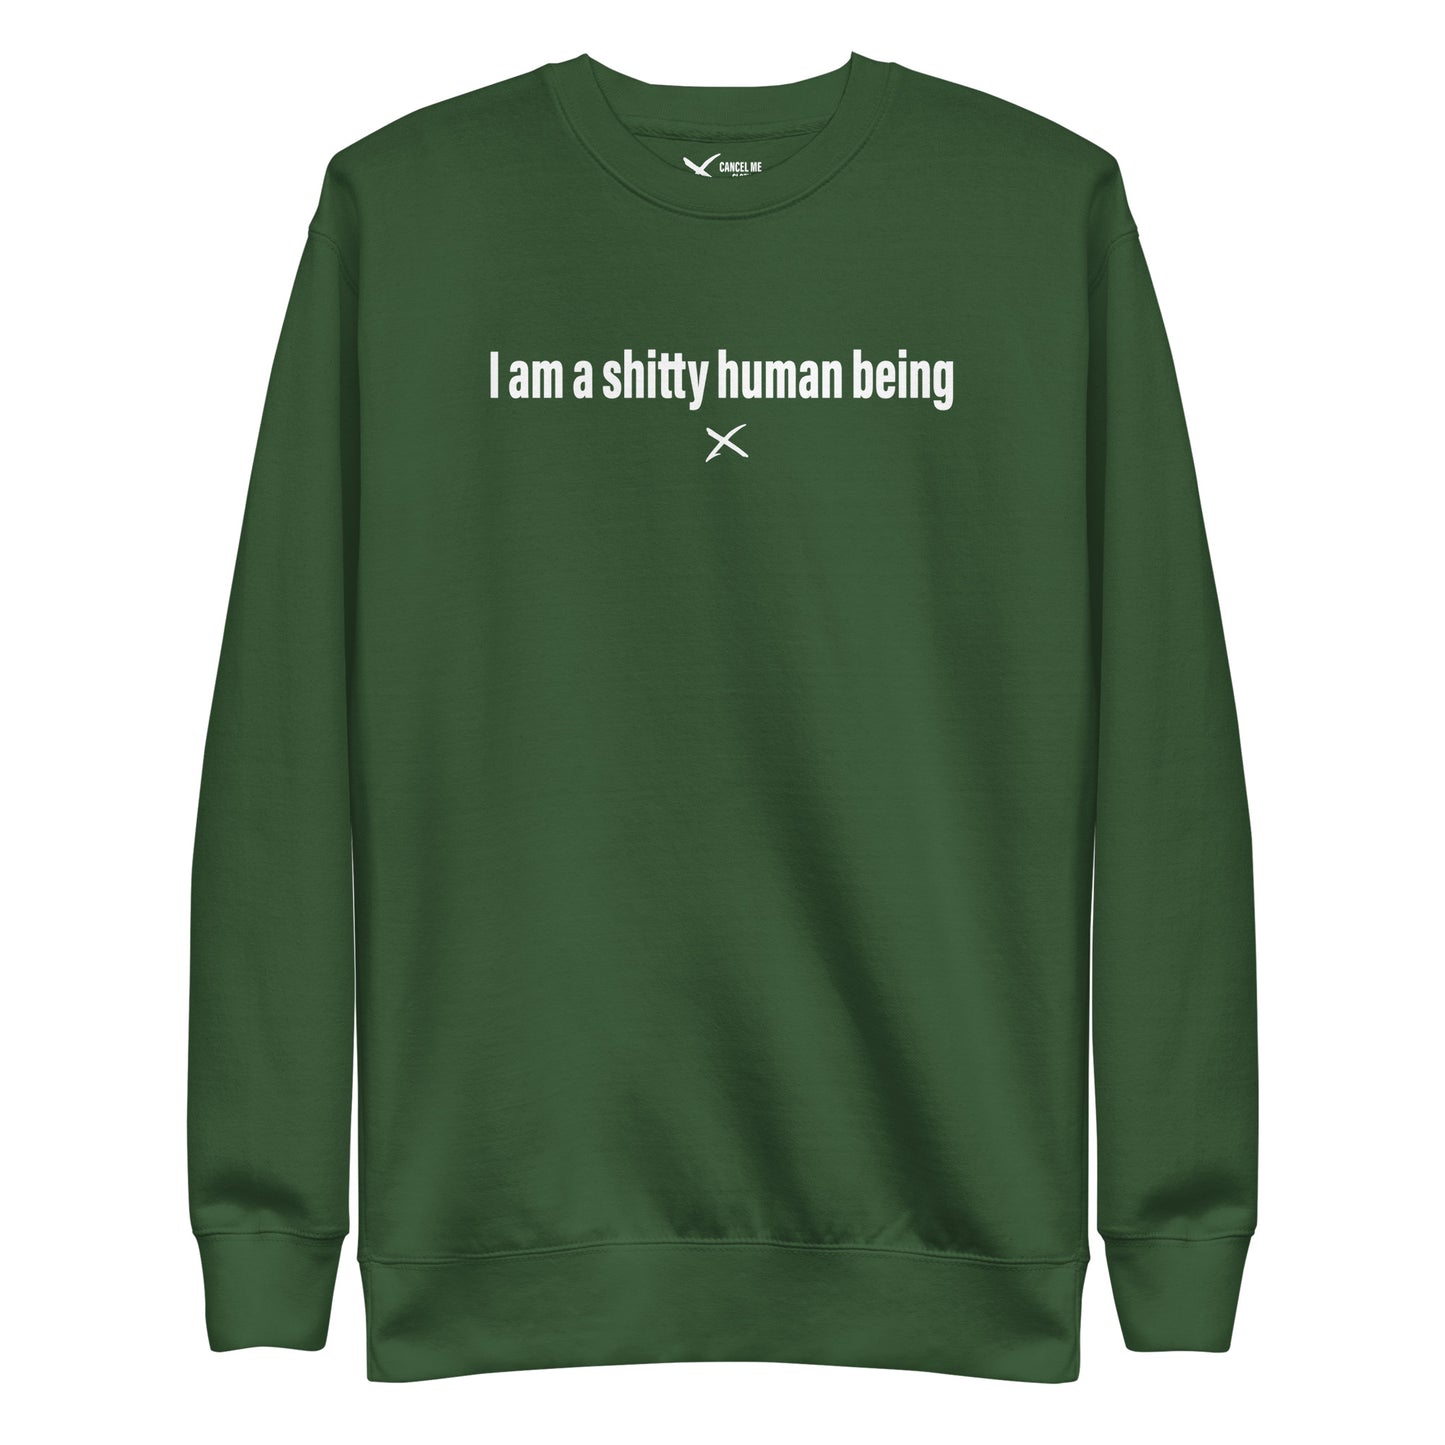 I am a shitty human being - Sweatshirt